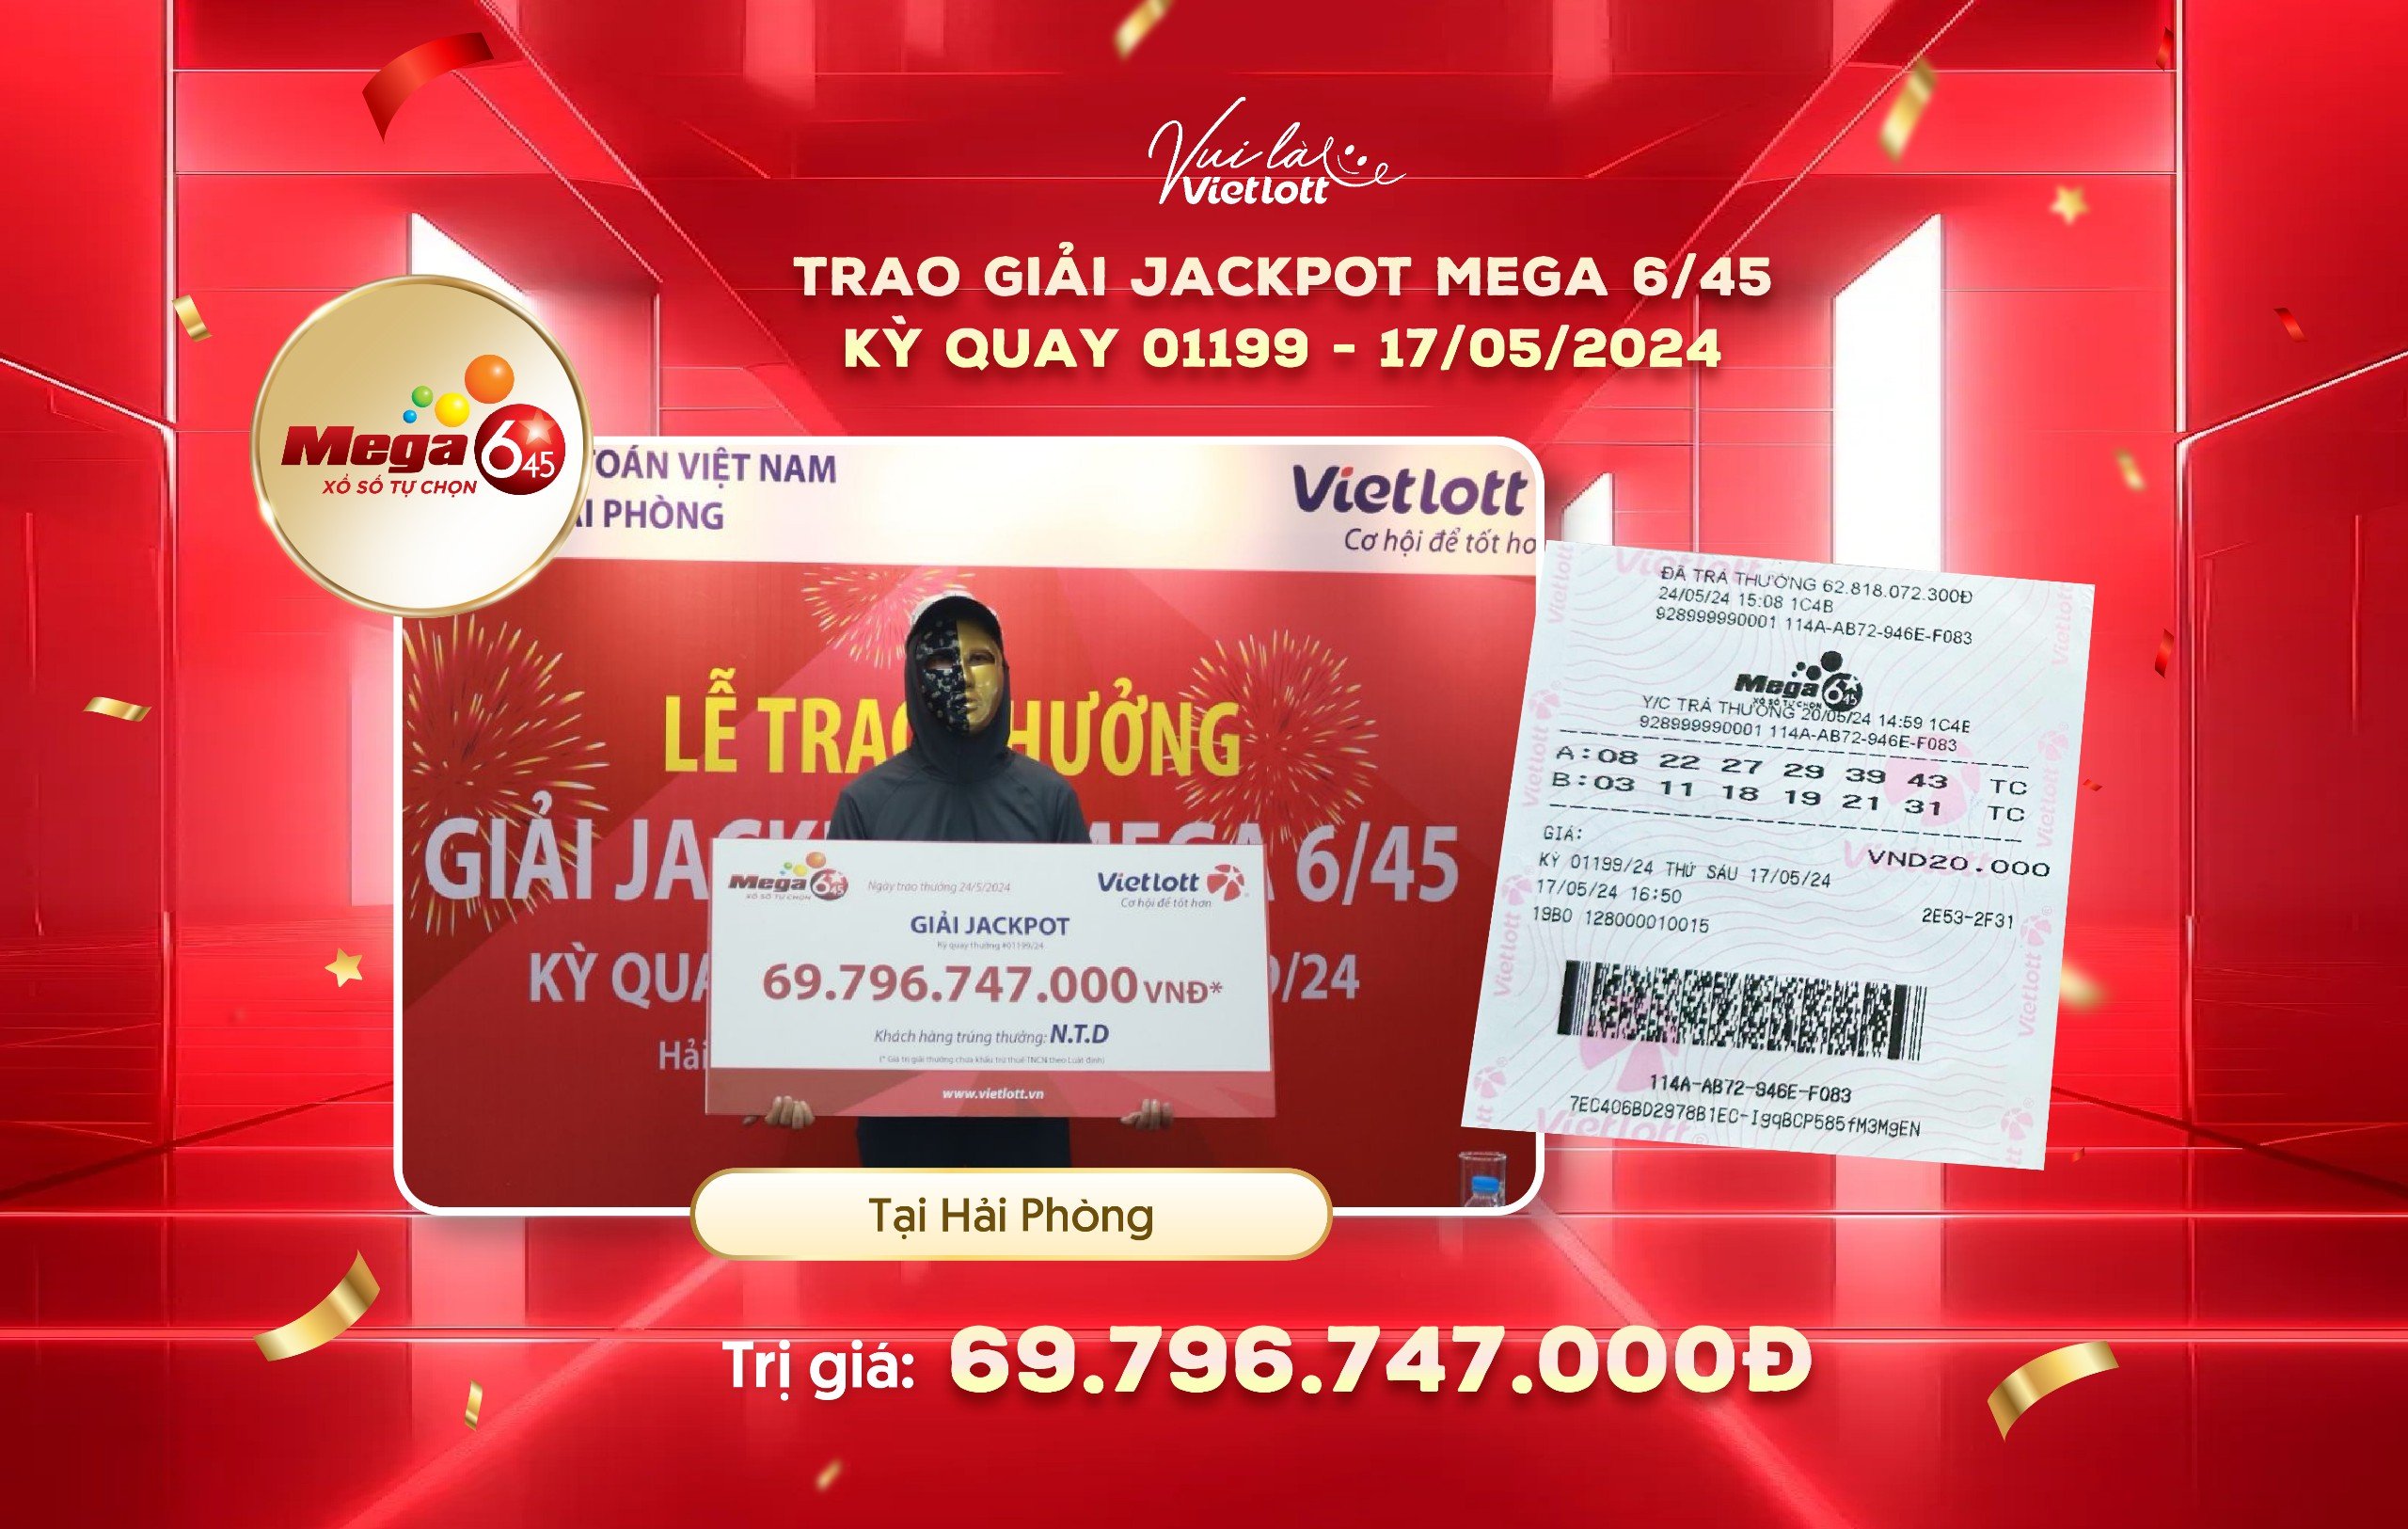 After more than 7 years of Vietlott's operation, Hai Phong has its first Jackpot Mega 6/45